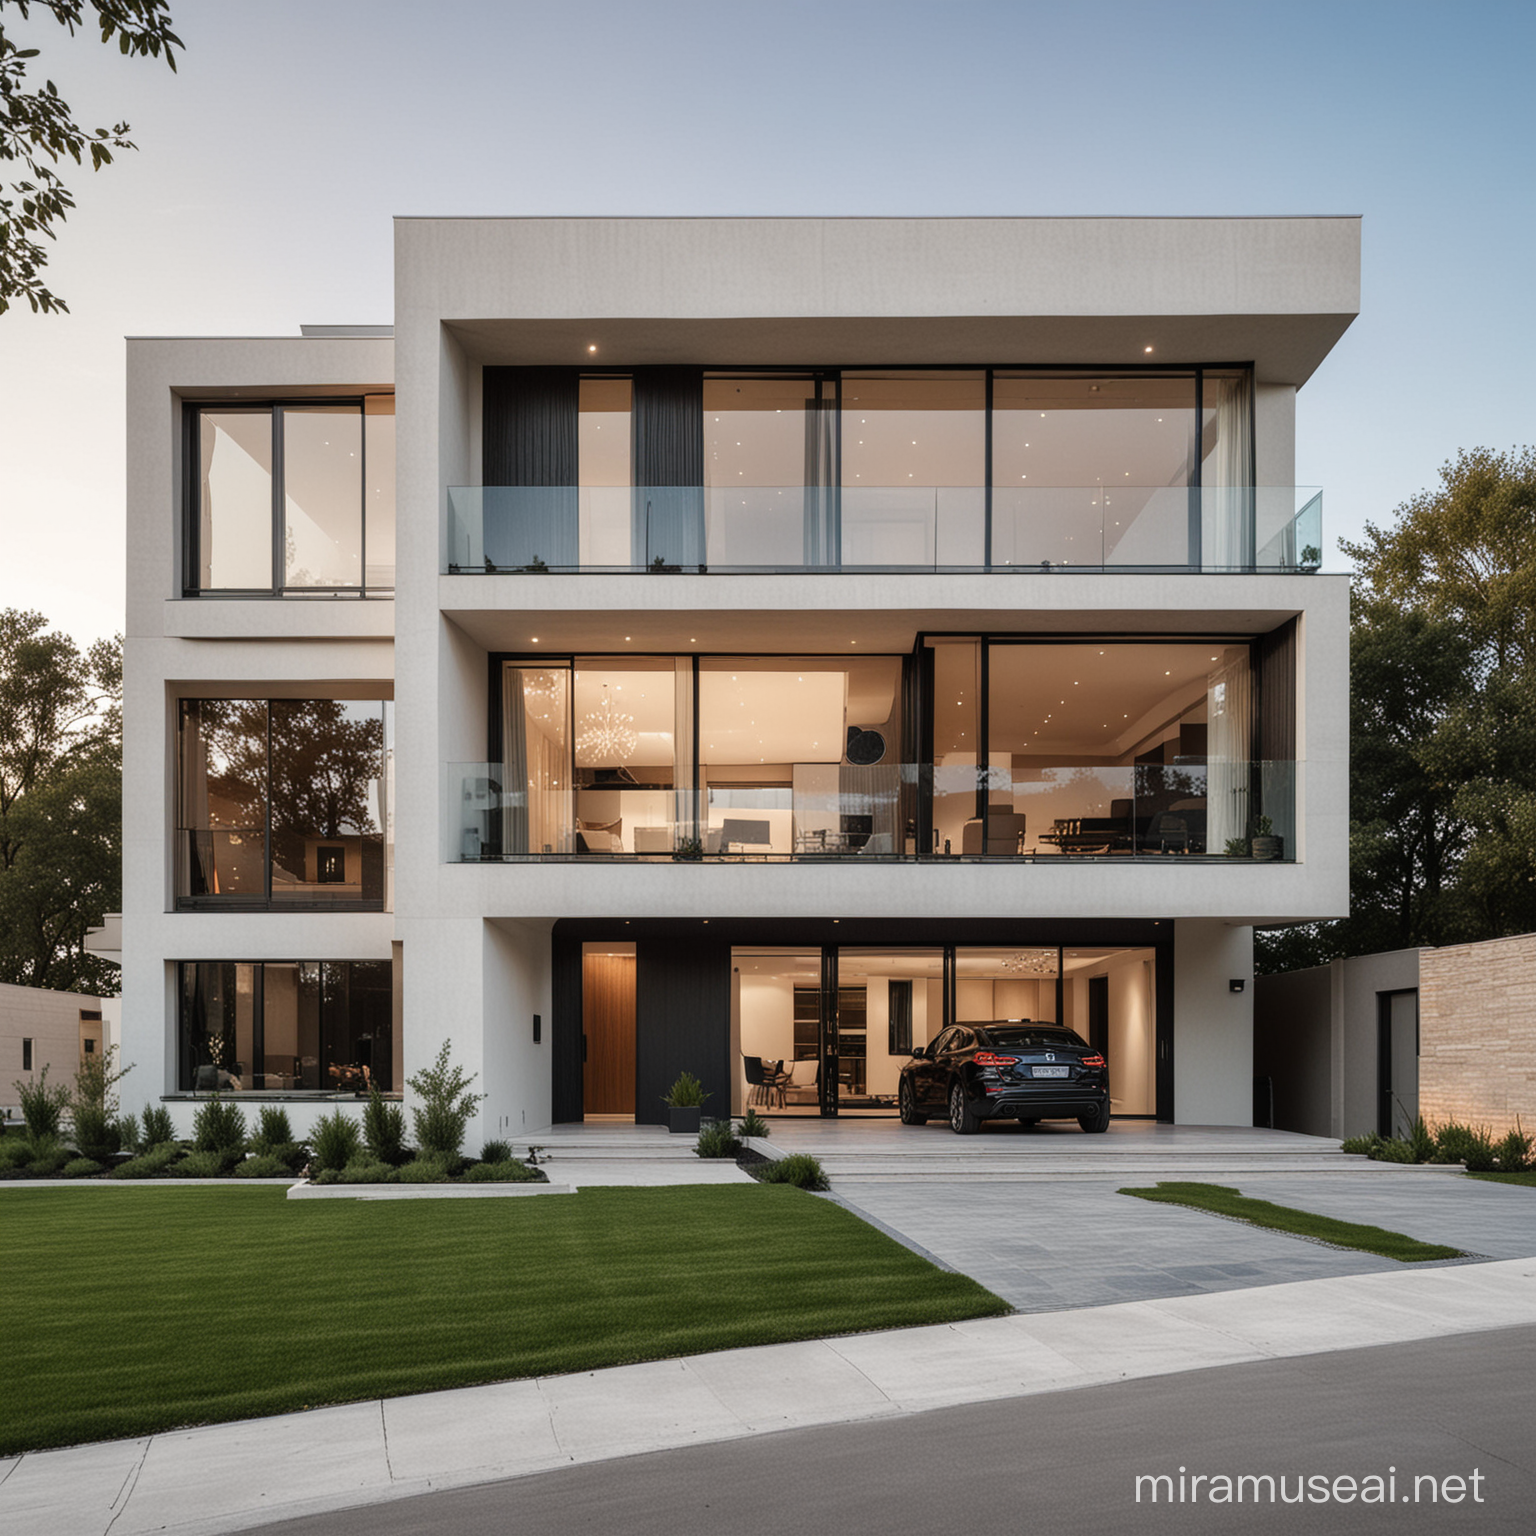 Smart and elegant house